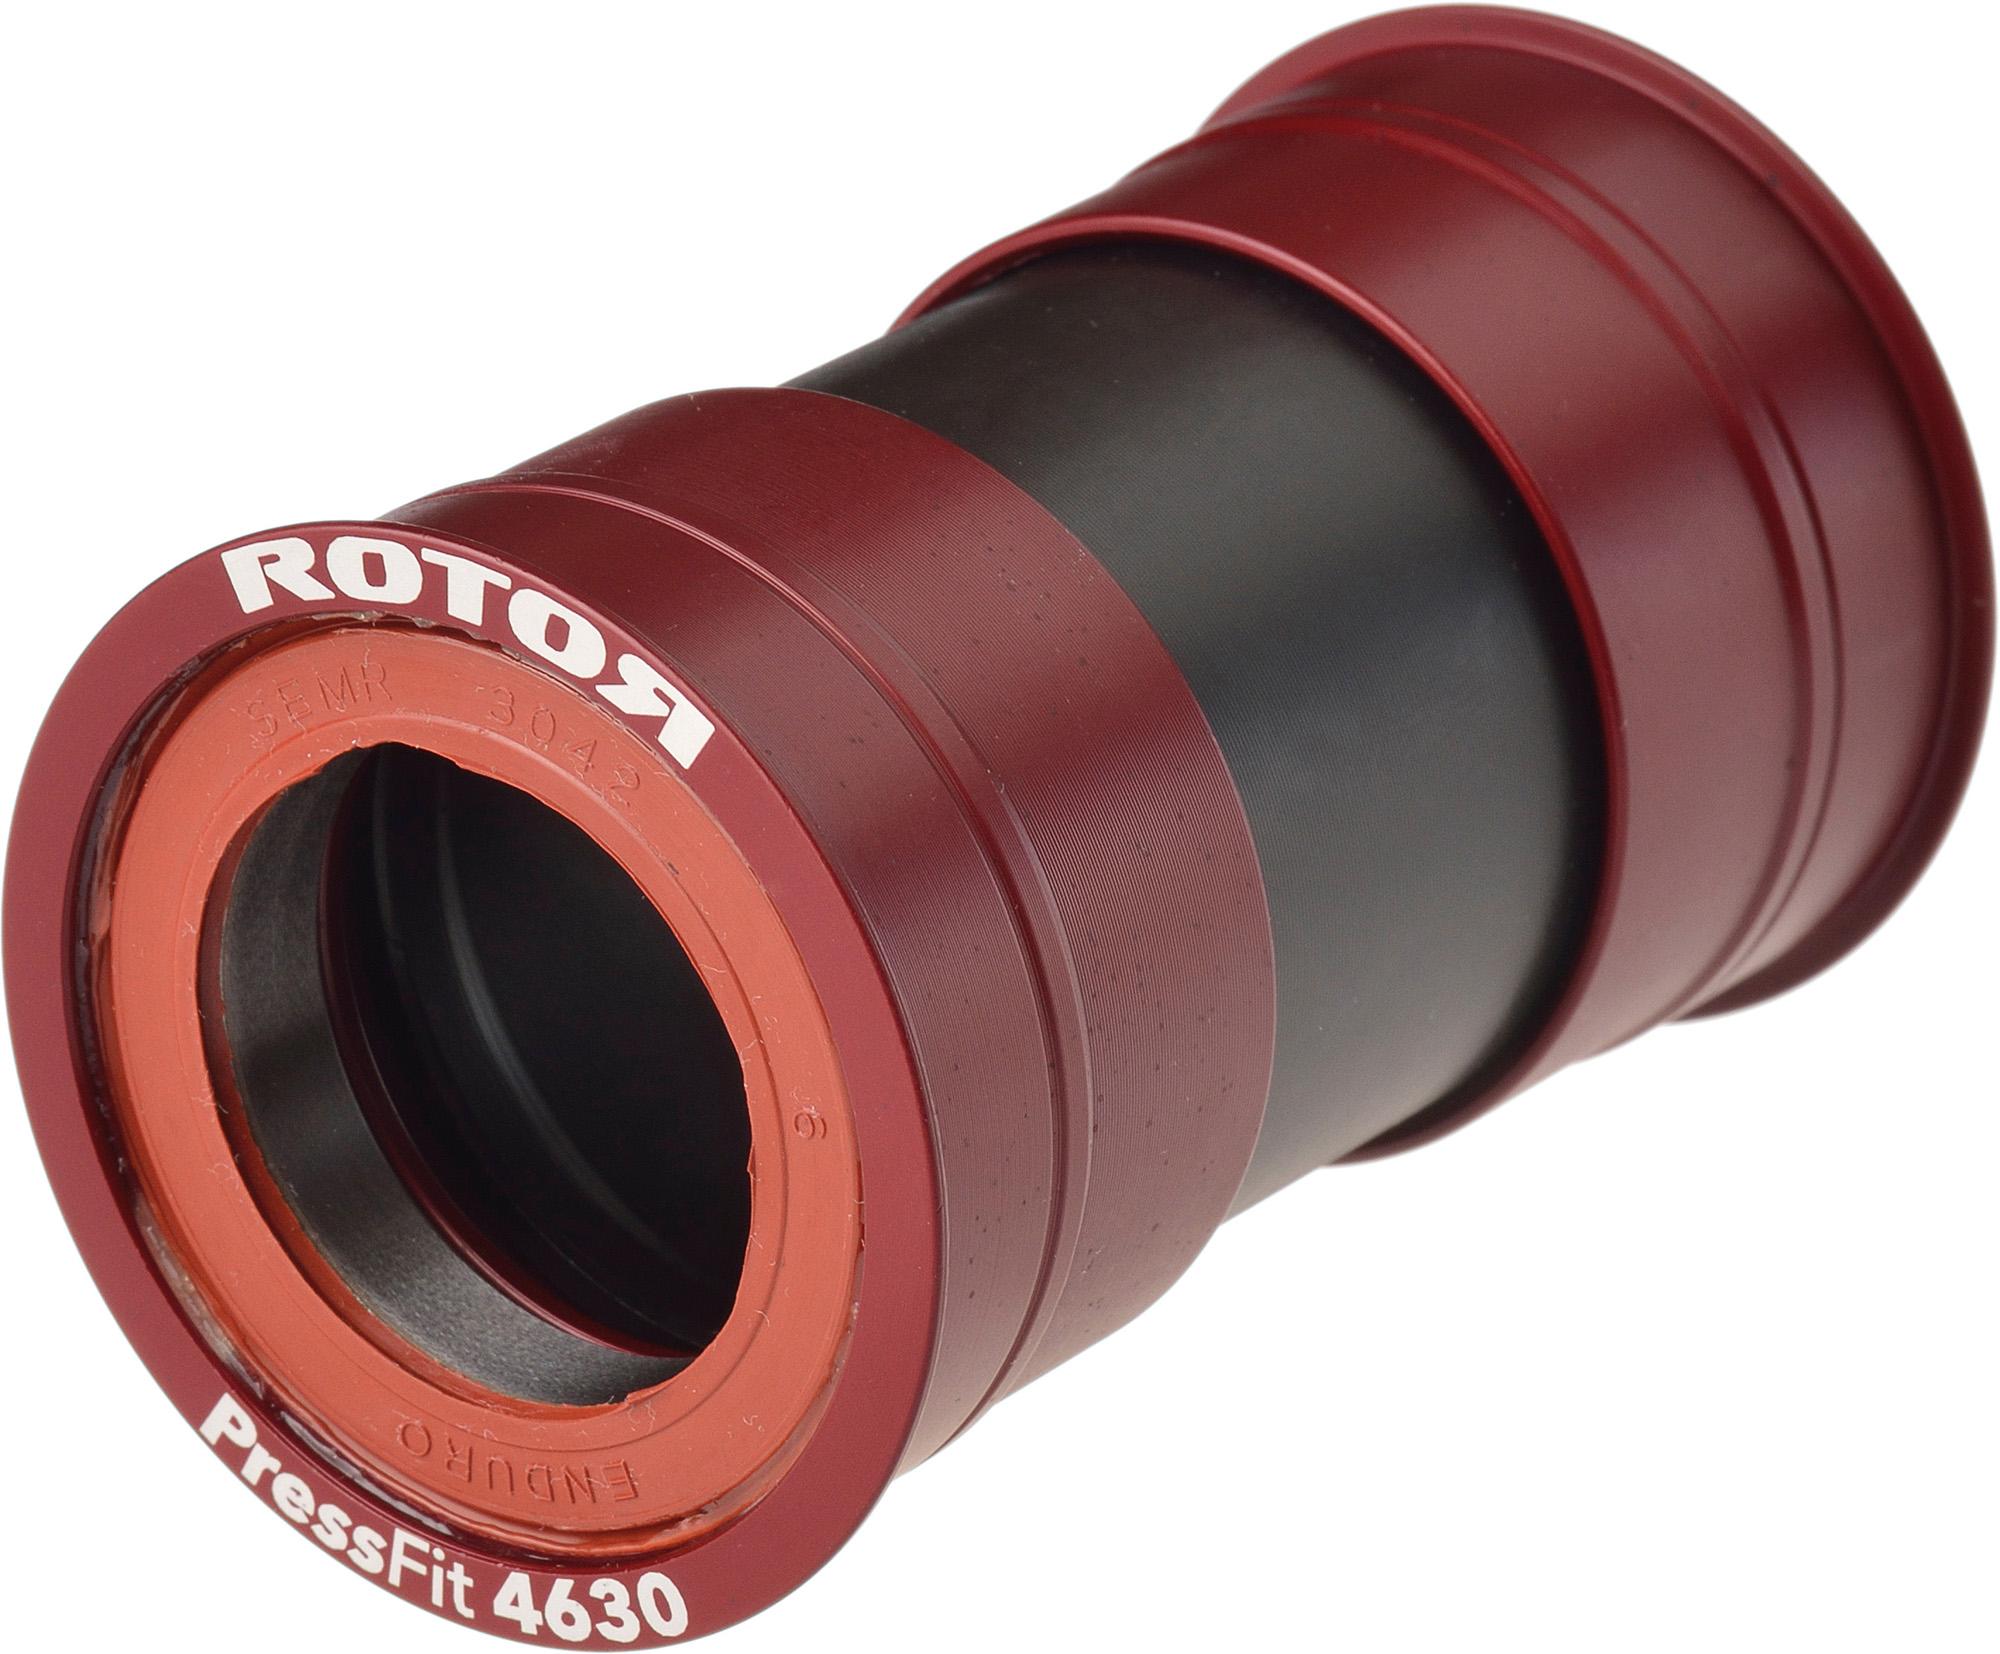 Rotor Pressfit 4630 Bottom Bracket (ceramic) - Red